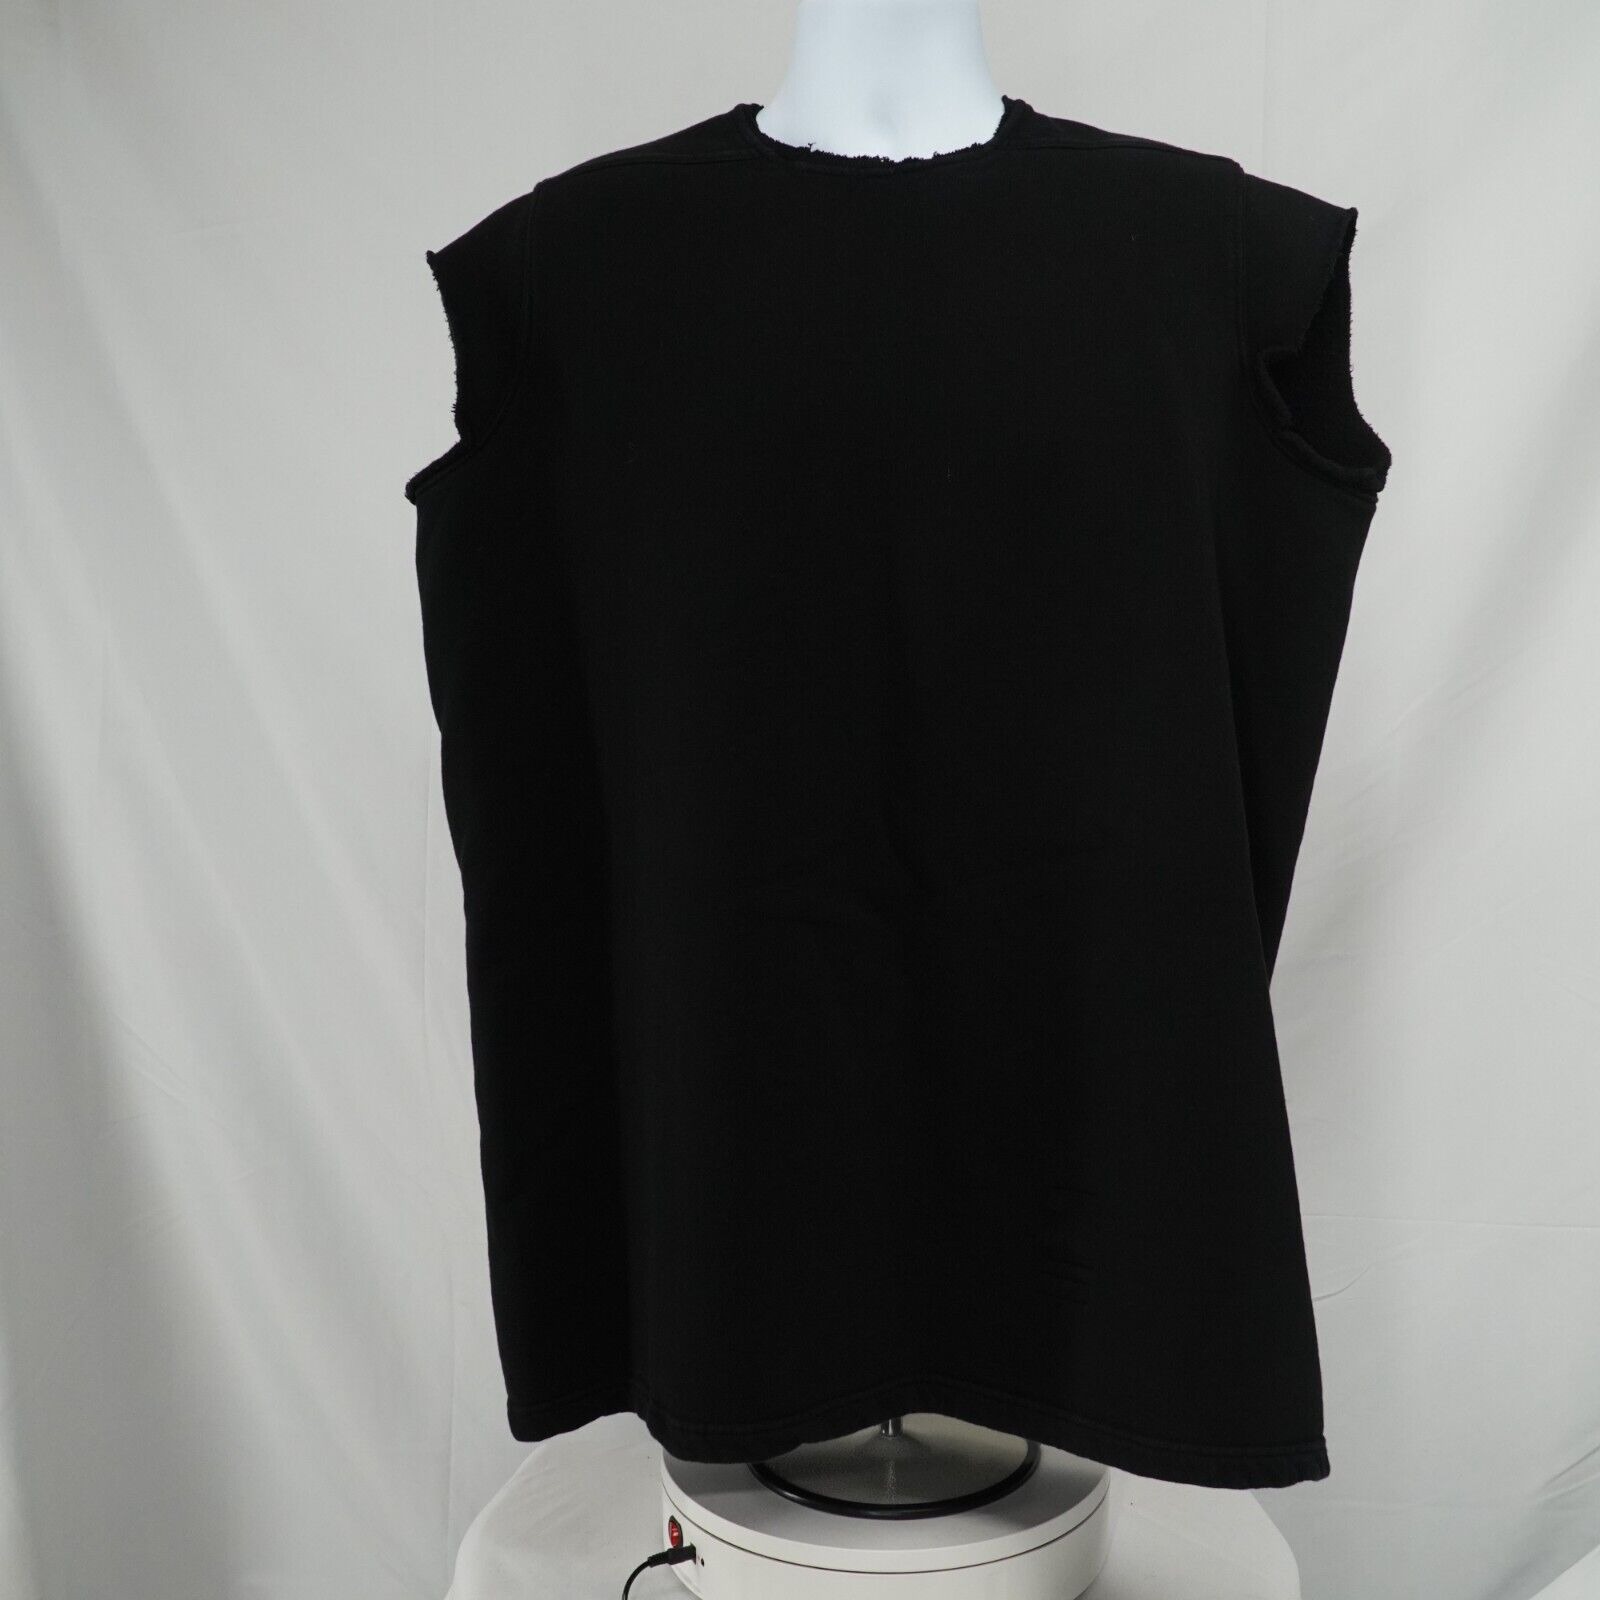 Jumbo Black Sleeveless Sweater Shirt Oversized SS16 Cyclops - 1